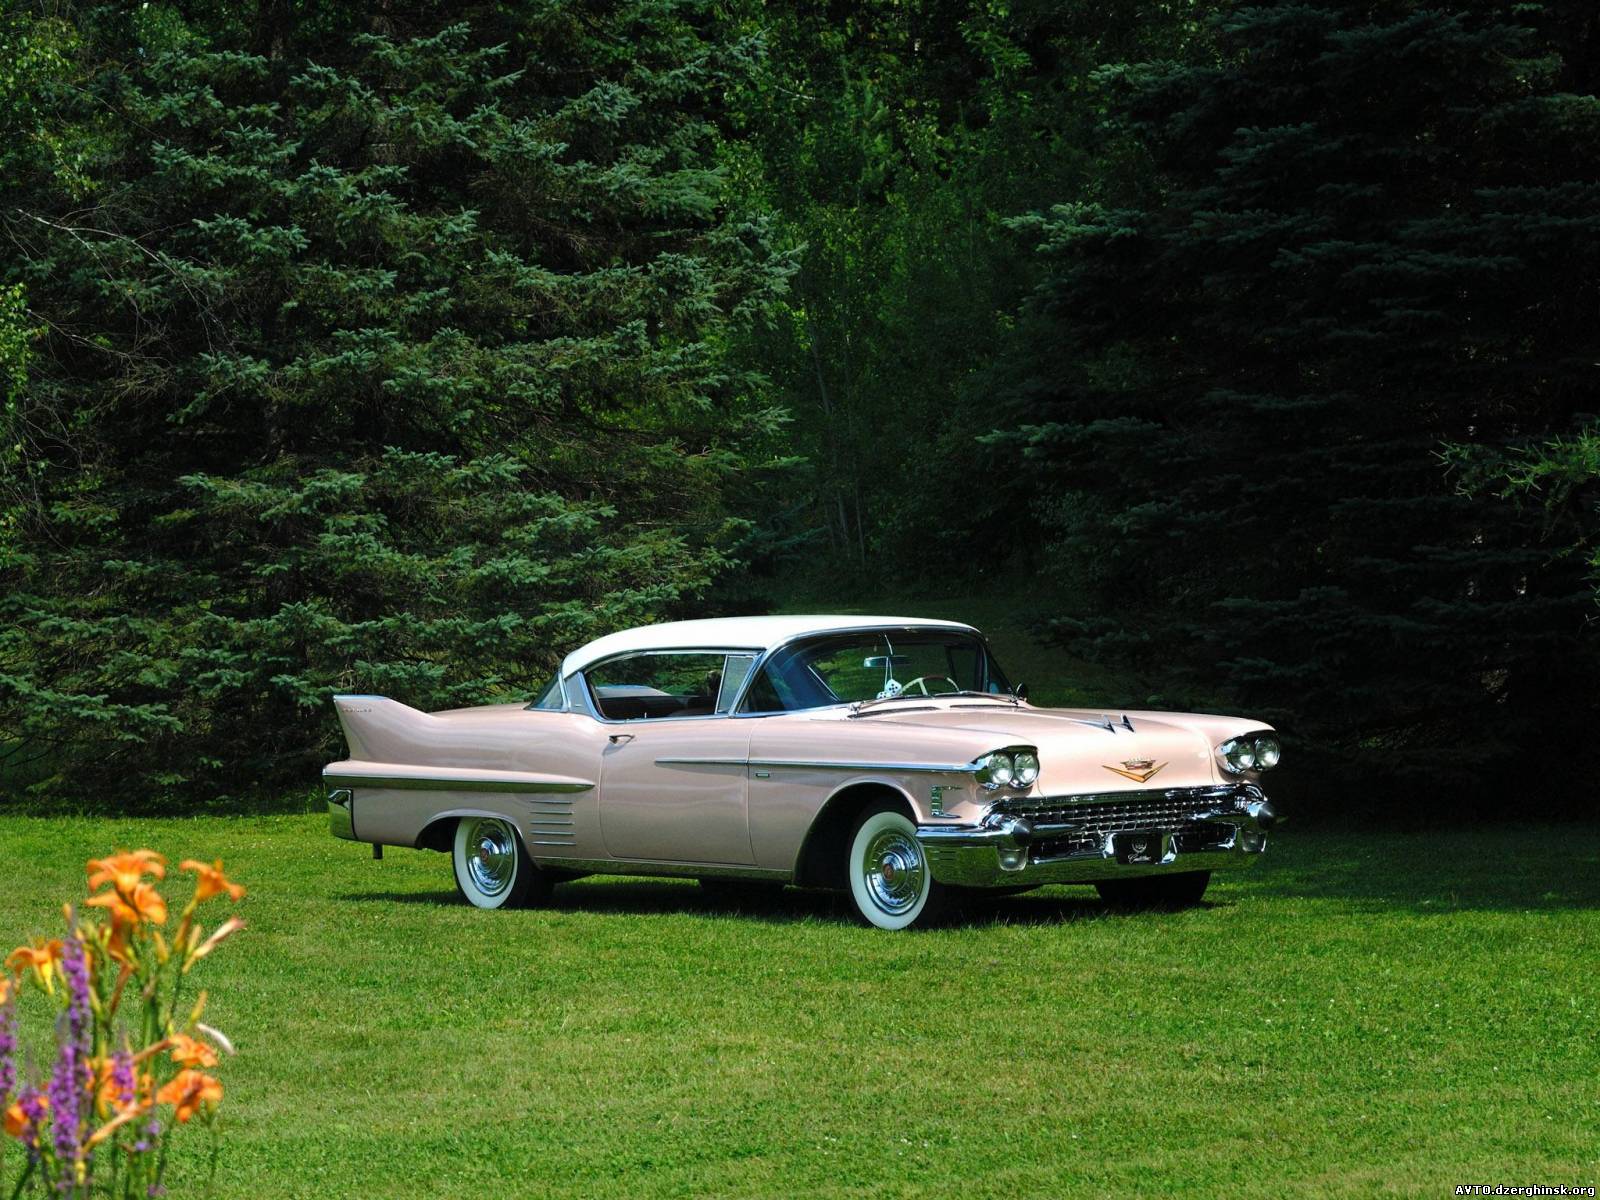 054. Cadillac Coupe DeVille 1957